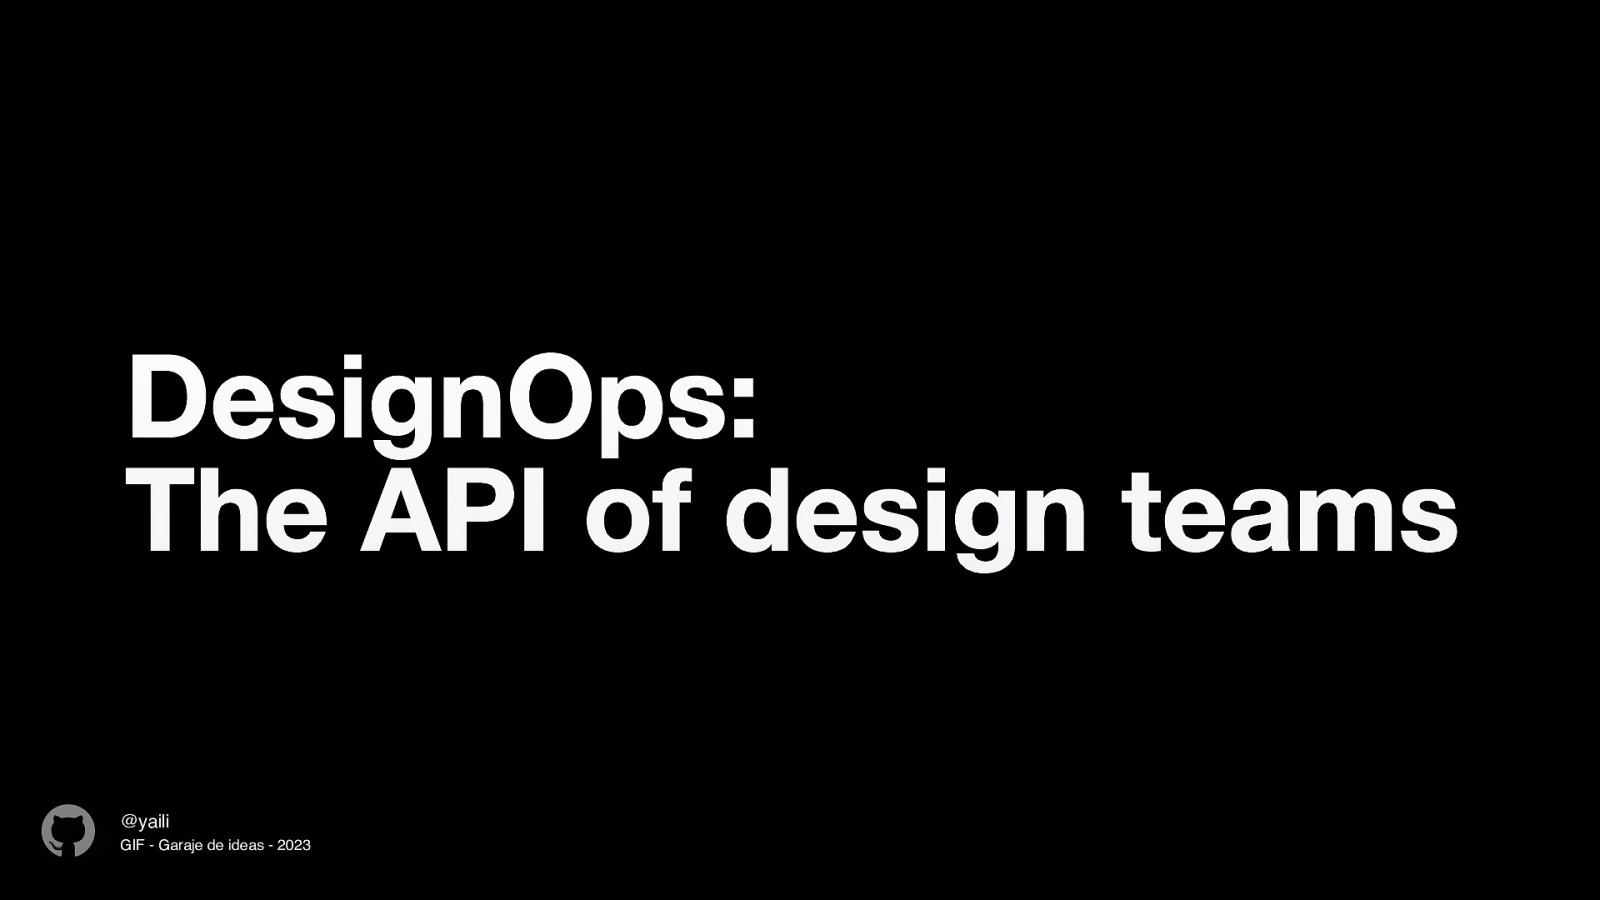 DesignOps: The API of design teams